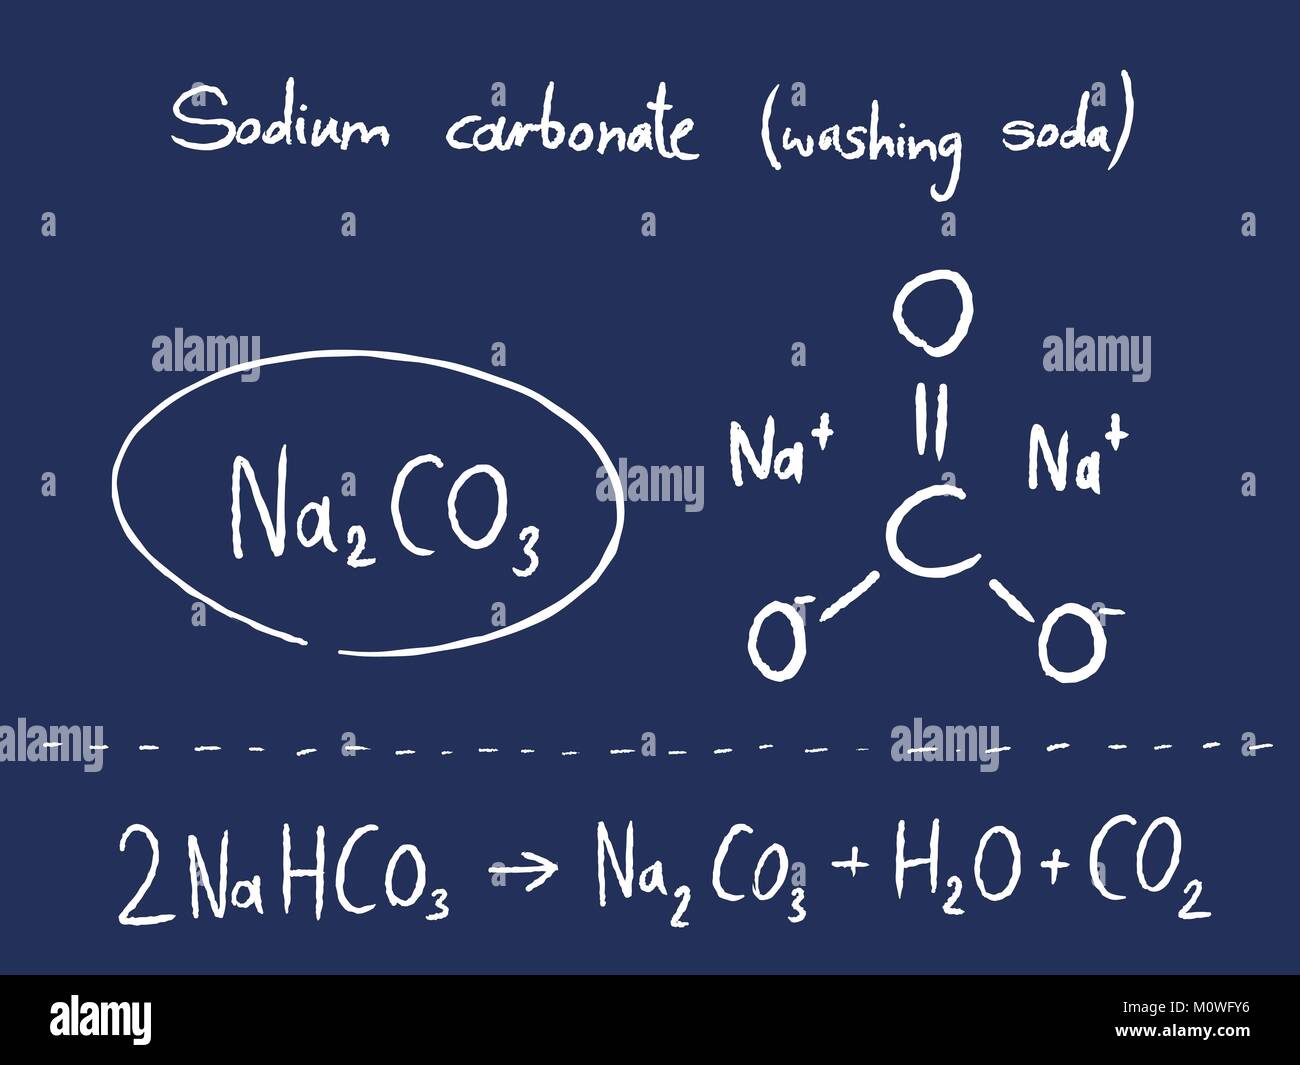 Sodium Carbonate Washing Soda Chemistry Lesson Science Stock Vector Image Art Alamy,Lovebirds Gif